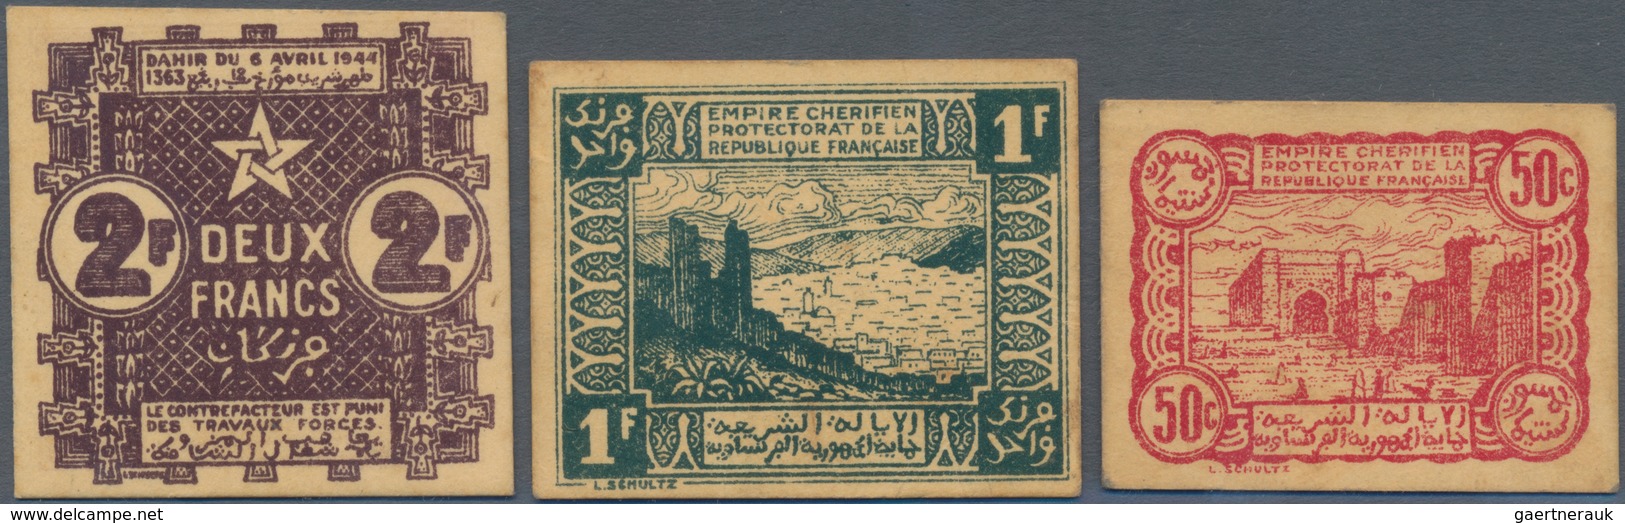 Morocco / Marokko: Empire Cherifien Set With 50 Centimes, 1 And 2 Francs 1944, P.41, 42, 43 In UNC C - Marruecos